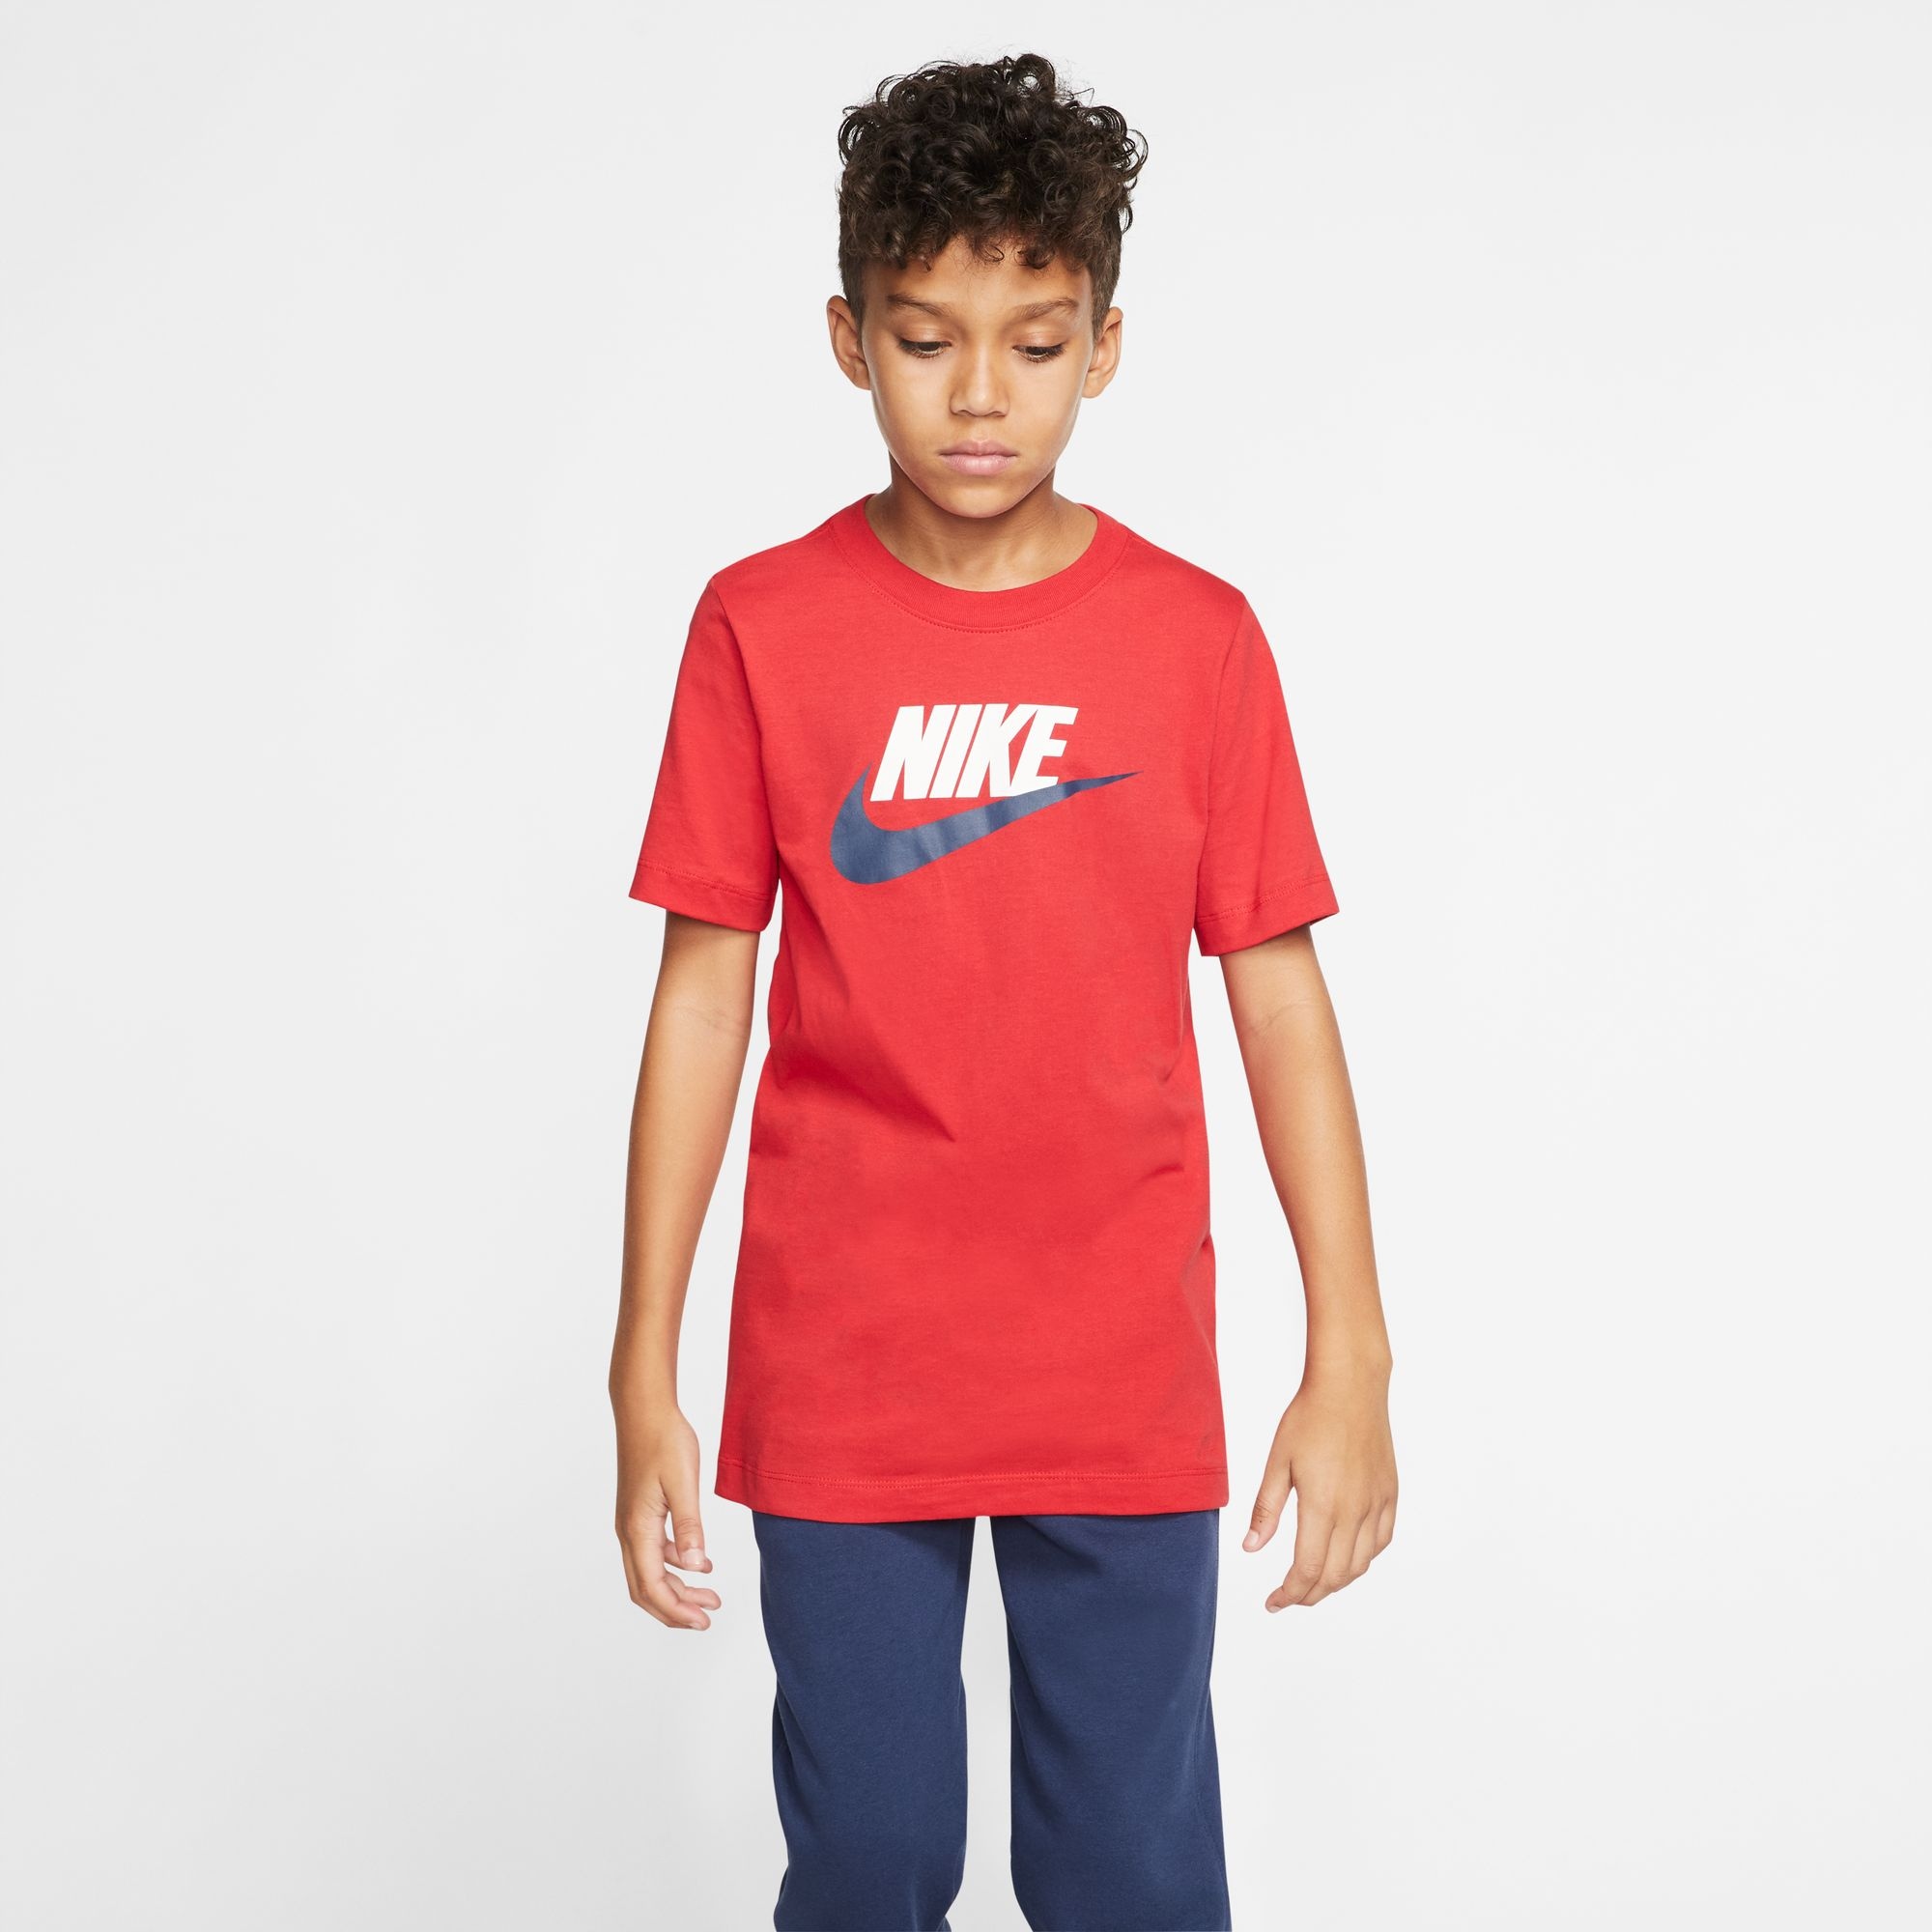 Modische Nike Sportswear T-Shirt shoppen ohne »BIG Mindestbestellwert COTTON KIDS\' T-SHIRT«